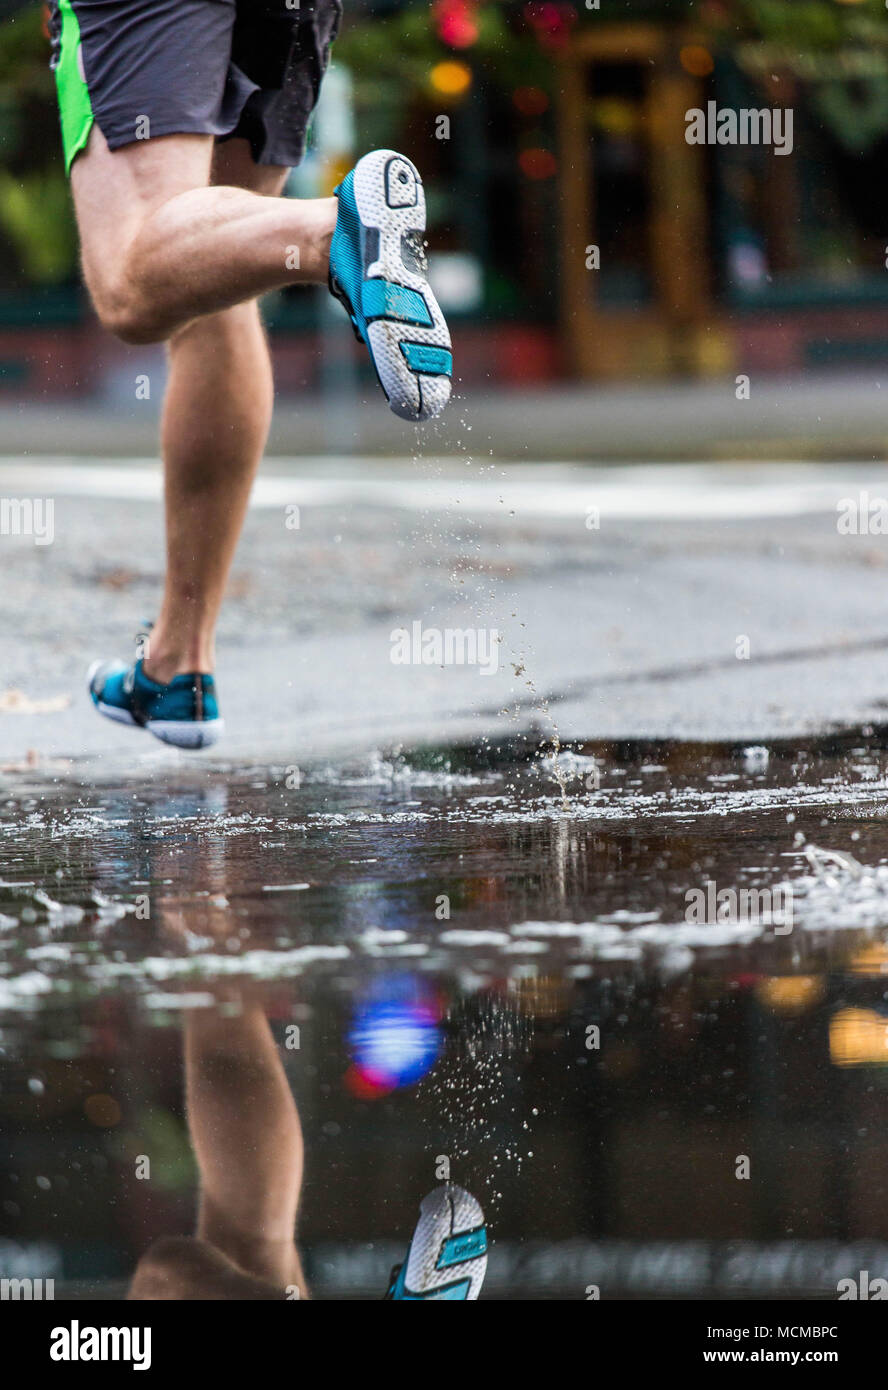 La section basse de runner jogging en rue, Pioneer Square, Seattle, Washington State, USA Banque D'Images